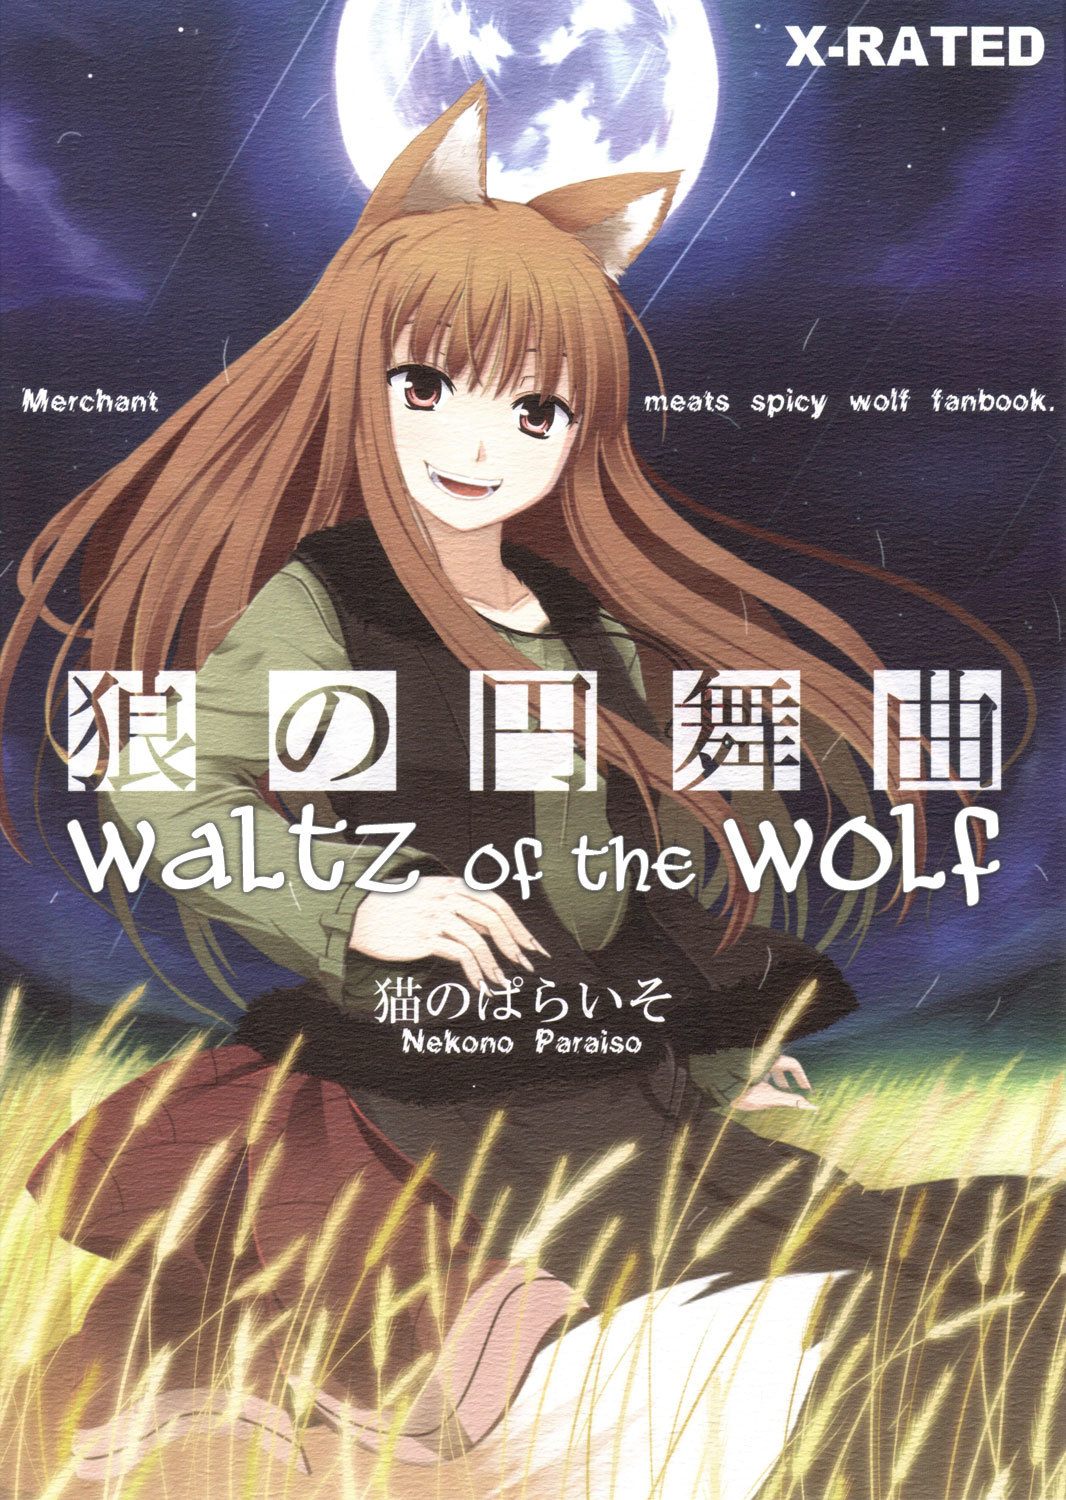 Waltz of the Wolf spice and wolf hentai manga